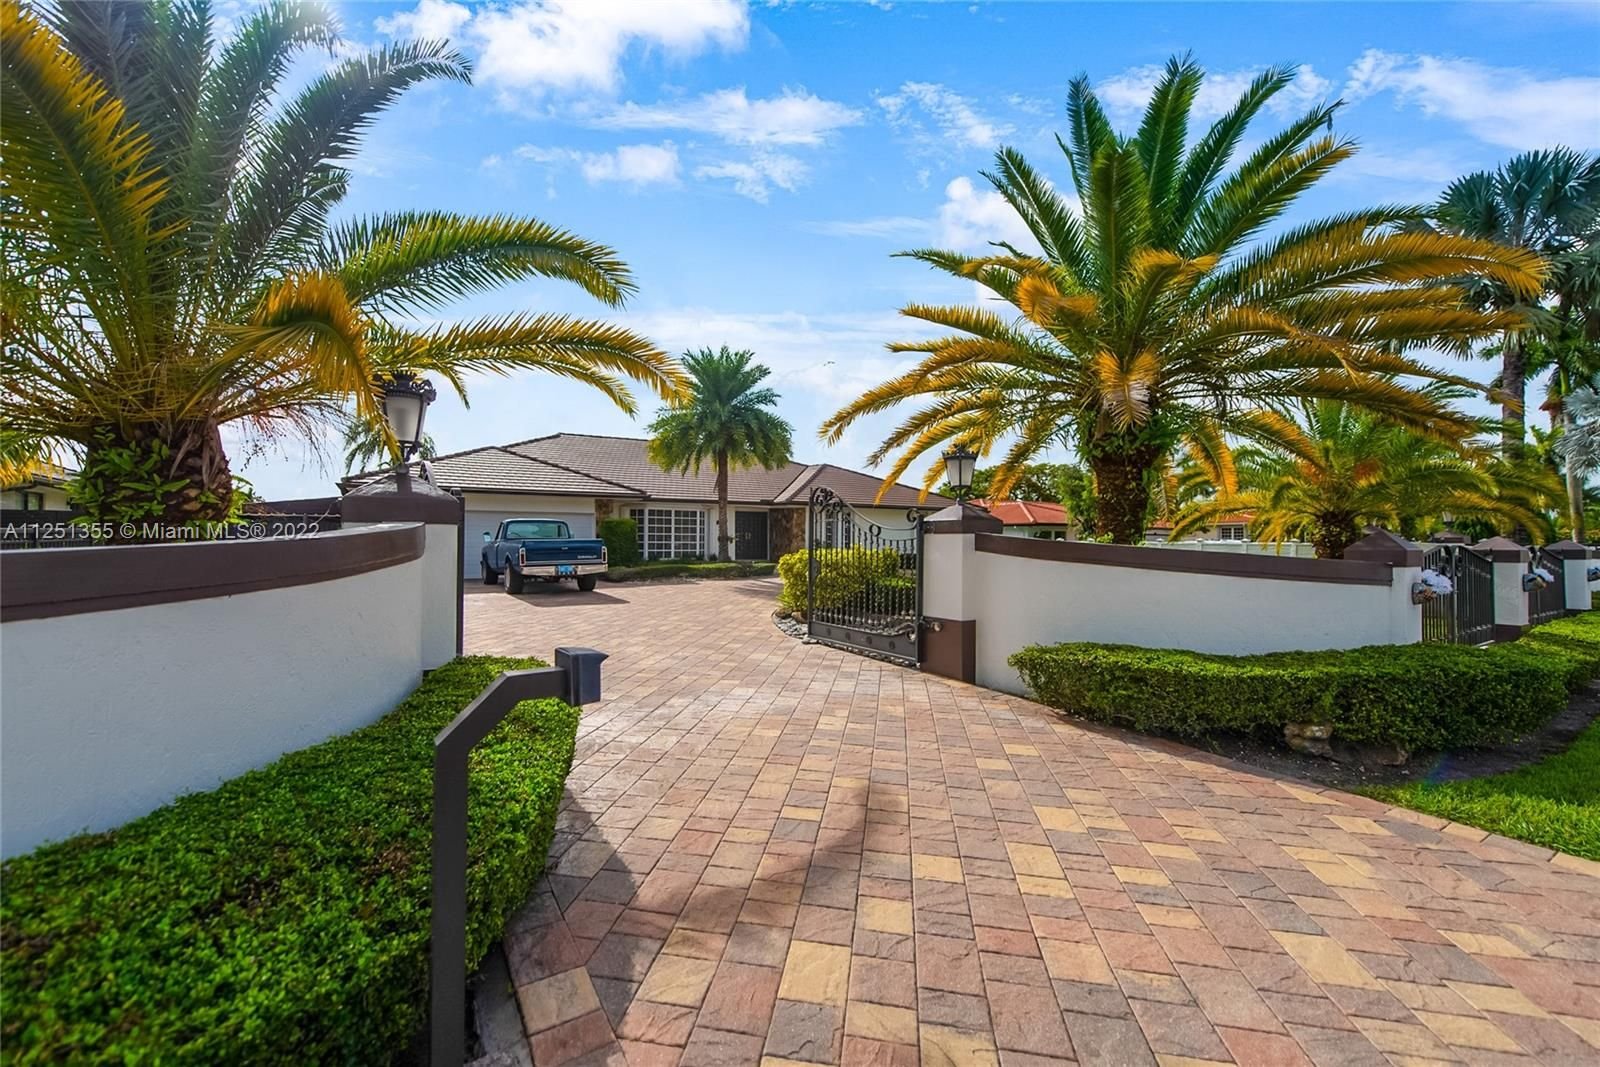 Real estate property located at 3825 128th Ave, Miami-Dade County, Miami, FL